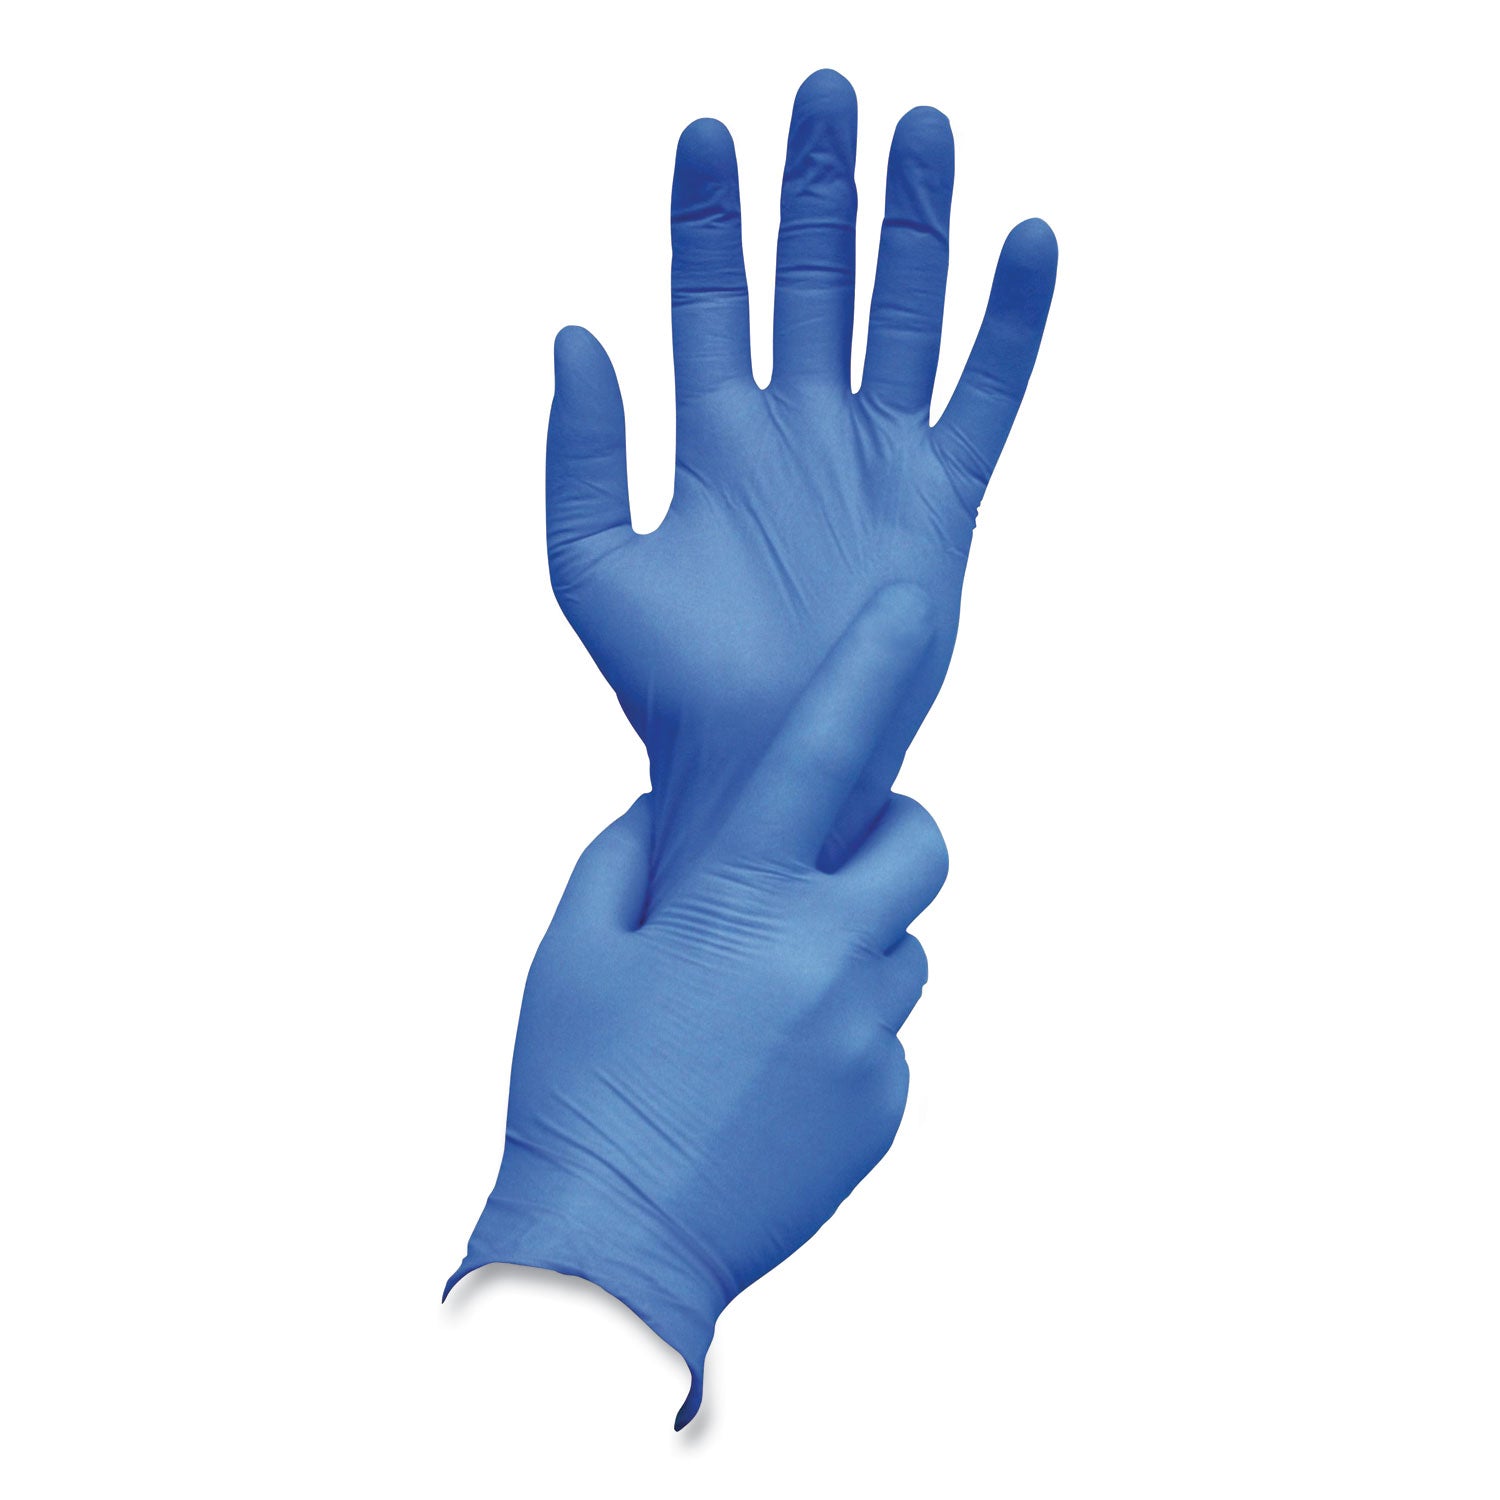 n400-series-powder-free-nitrile-gloves-large-blue-100-box_txinlg400 - 1